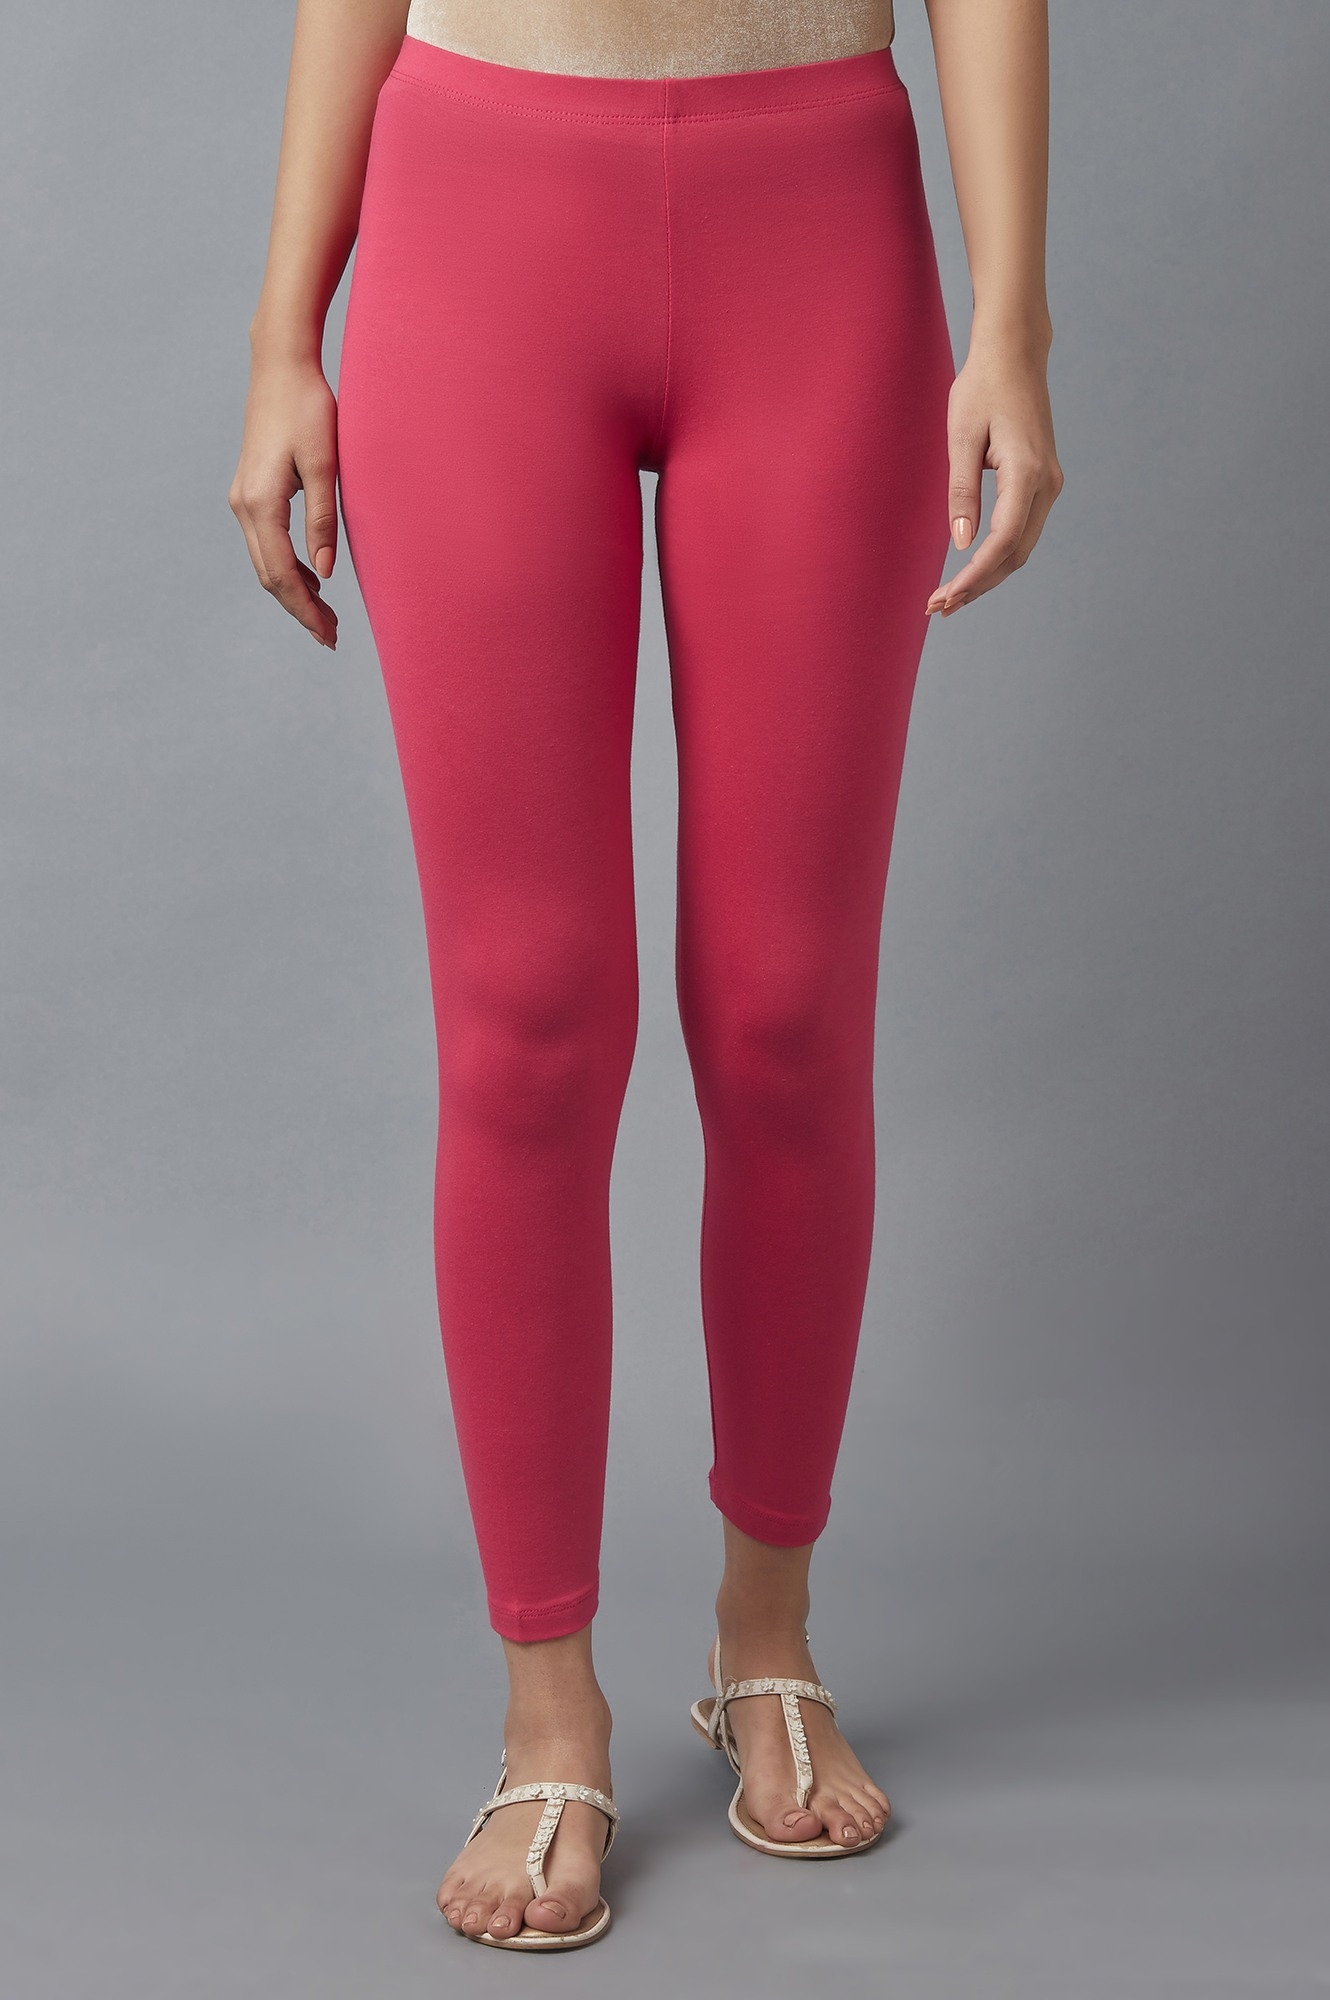 Elleven | Pink Cotton Lycra Cropped Tights